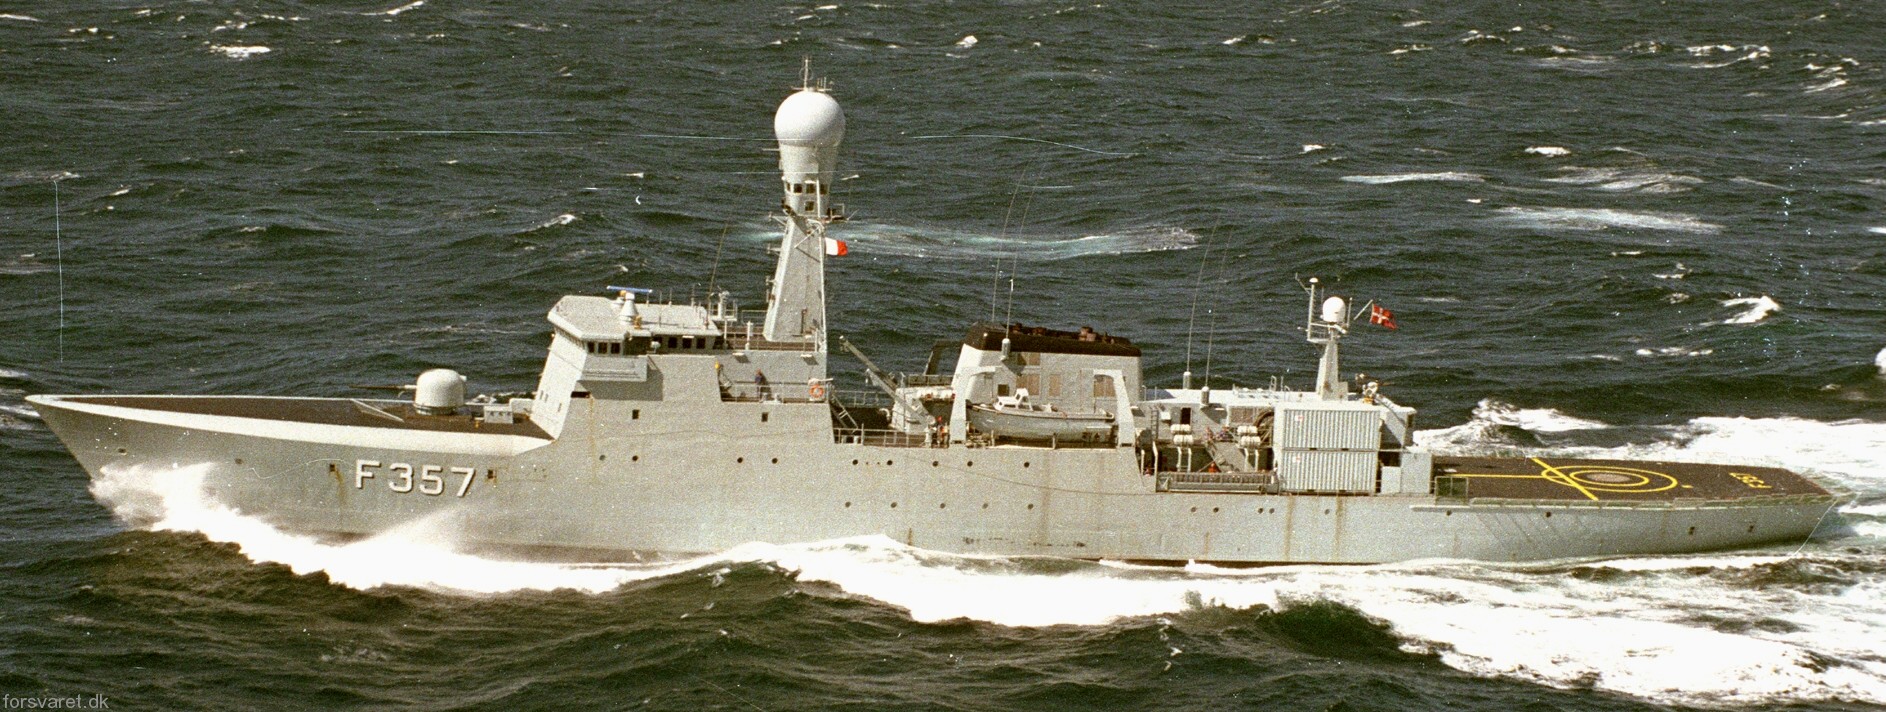 f-357 hdms thetis ocean patrol frigate royal danish navy kongelige danske marine inspektionsskibet 61